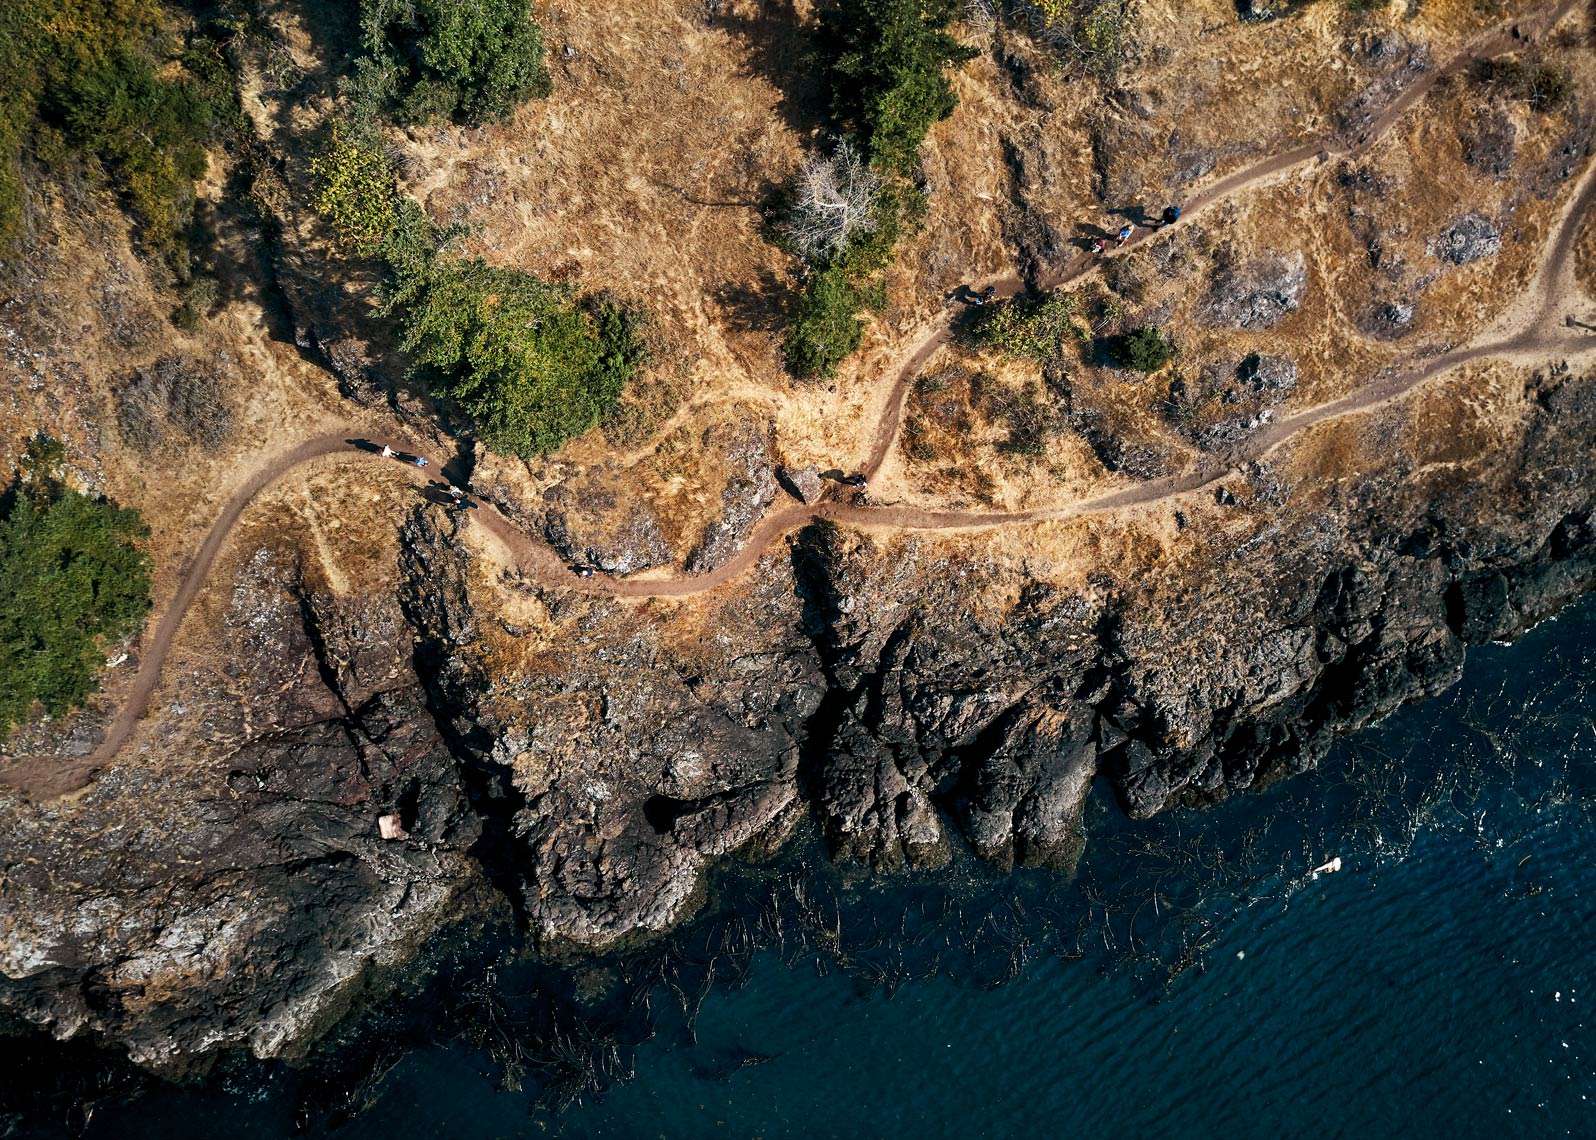 drone photographer Amos Morgan captures a birds eye view of a trail